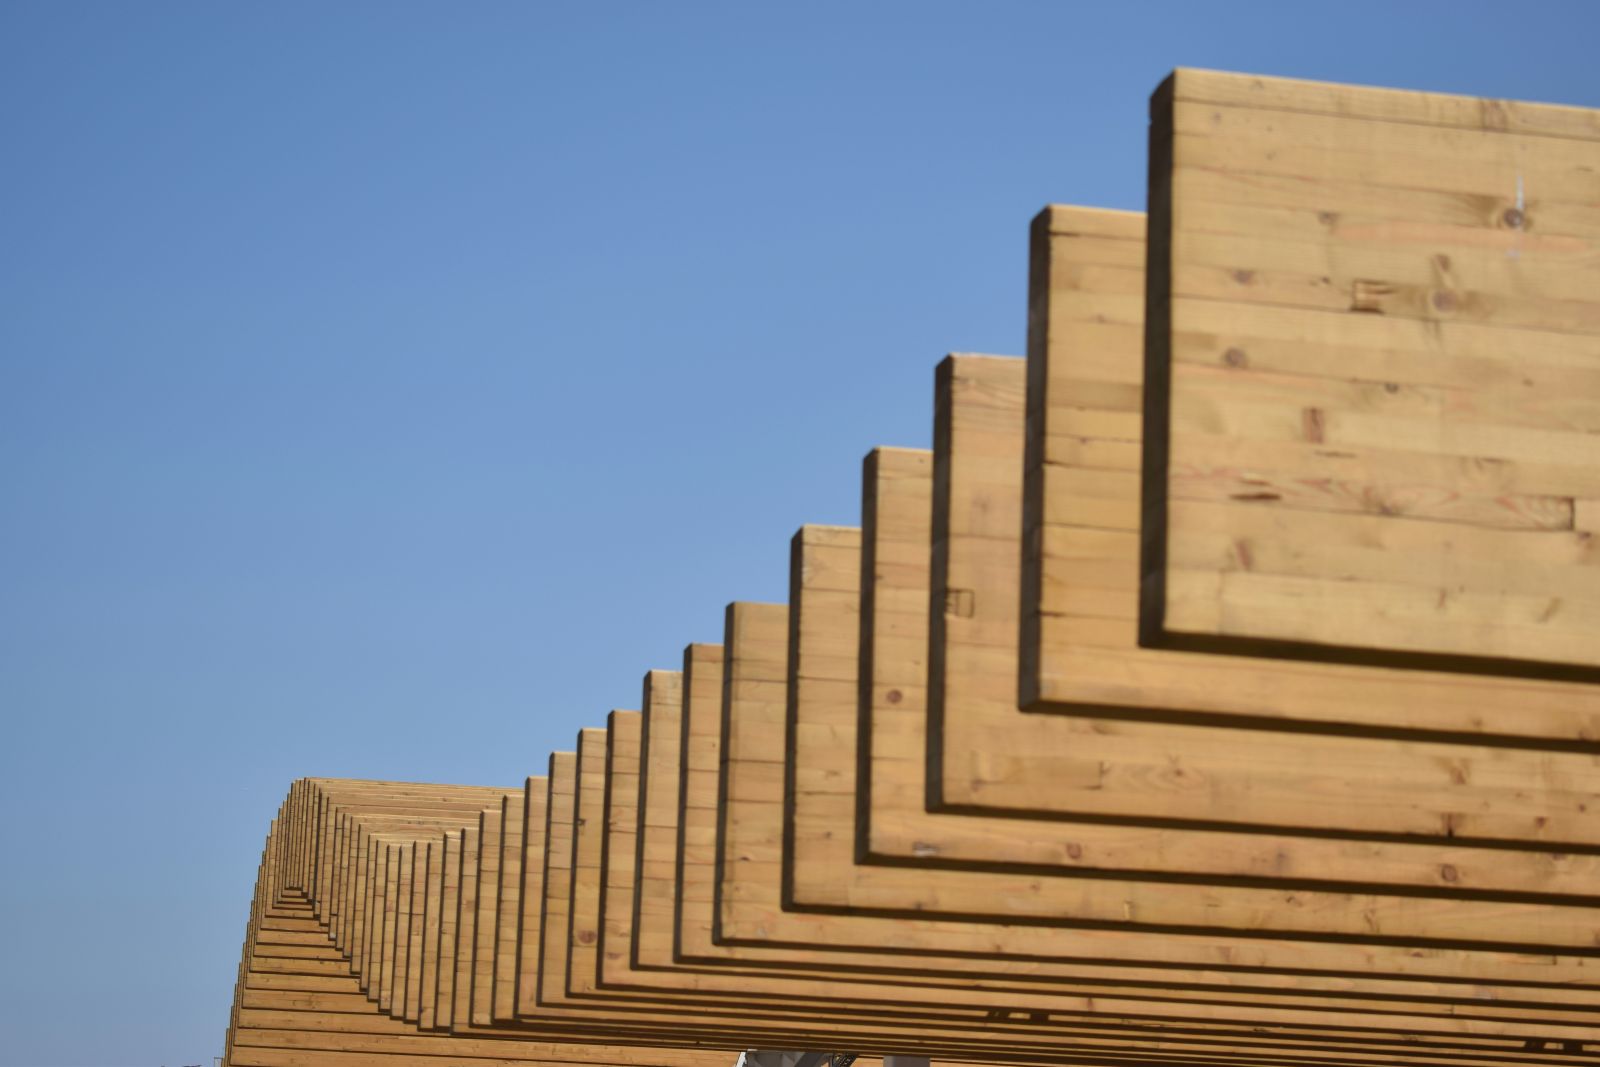 Lumber - Lumber arch by Ipek Aydogdu via Unsplash